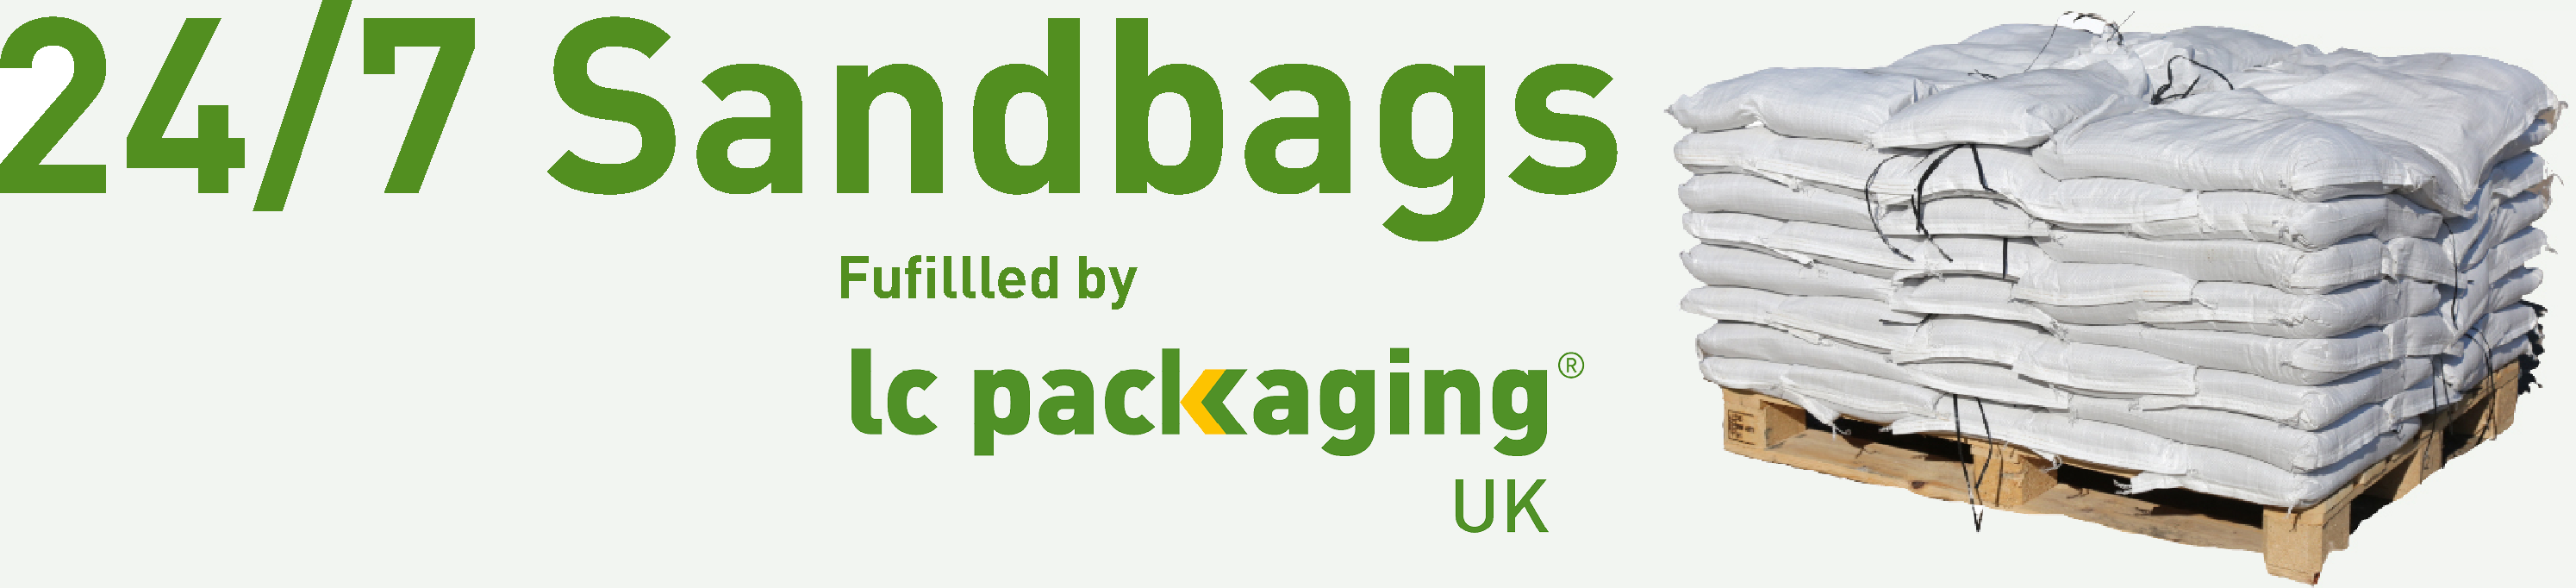 24/7 Sandbags, fulfilled by LC Packaging UK Ltd